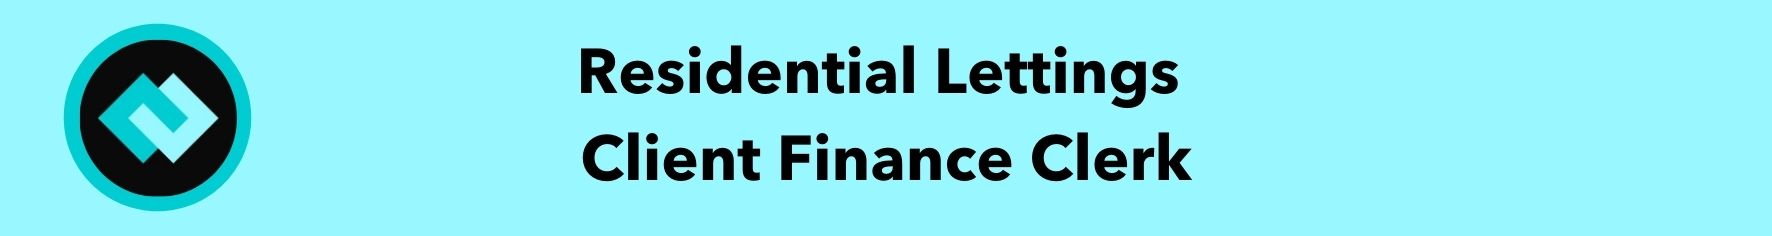 Residential Lettings Client Finance Clerk Job Vacancy